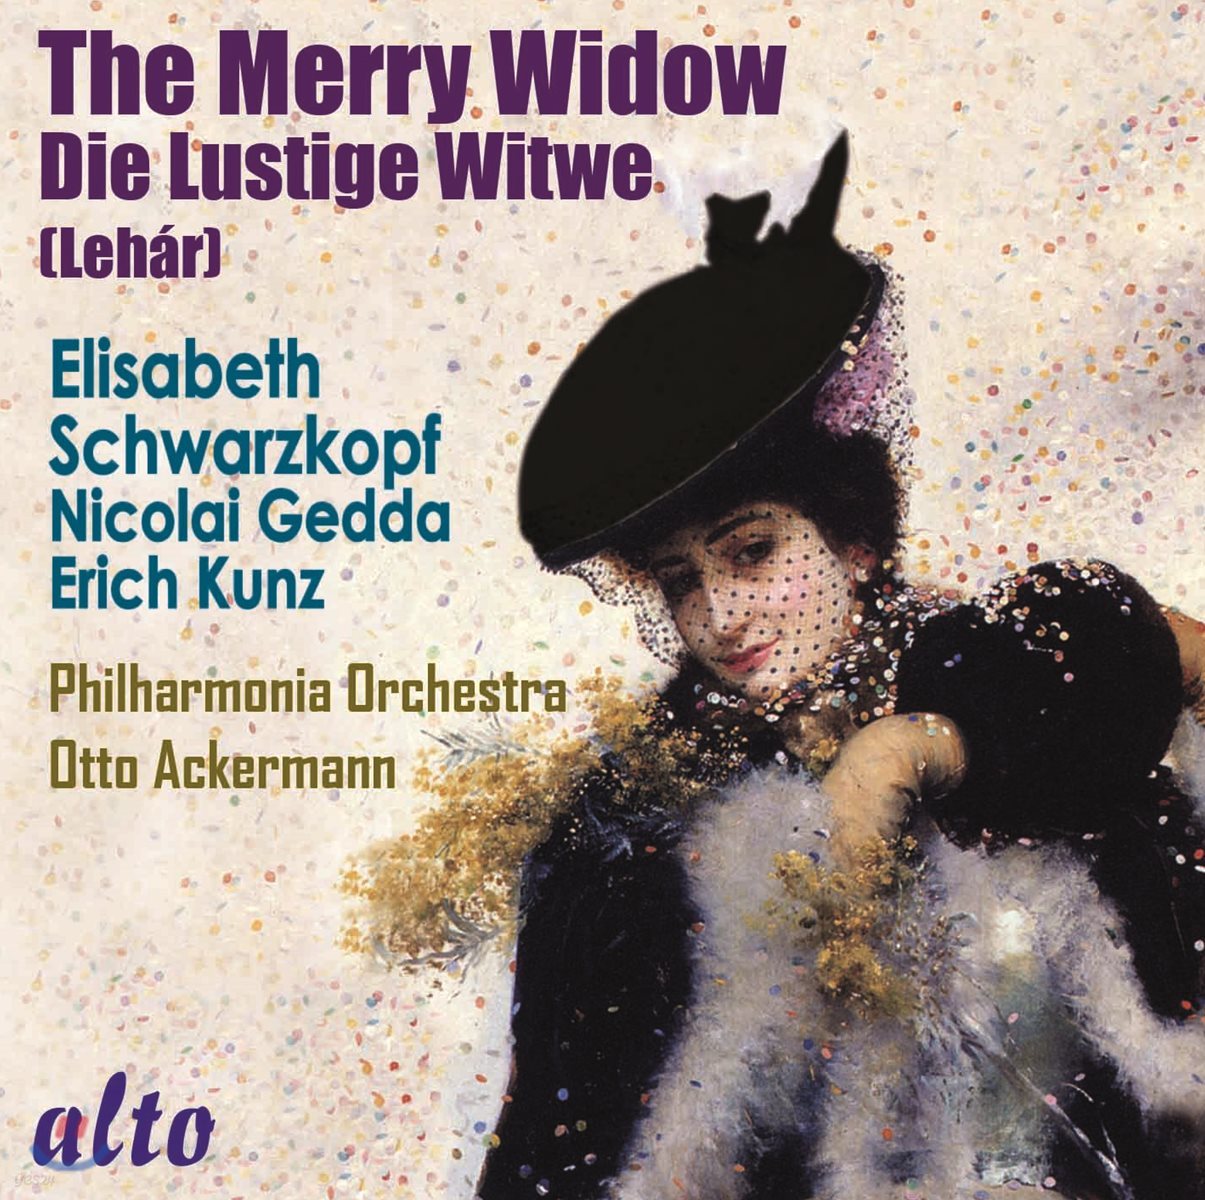 Elisabeth Schwarzkopf / Nicolai Gedda 레하르: 오페레타 &#39;메리 위도우 [유쾌한 미망인]&#39; - 엘리자베스 슈바르츠코프, 니콜라이 게다, 필하모니아 오케스트라, 오토 아커만 (Franz Lehar: The Merry Widow)